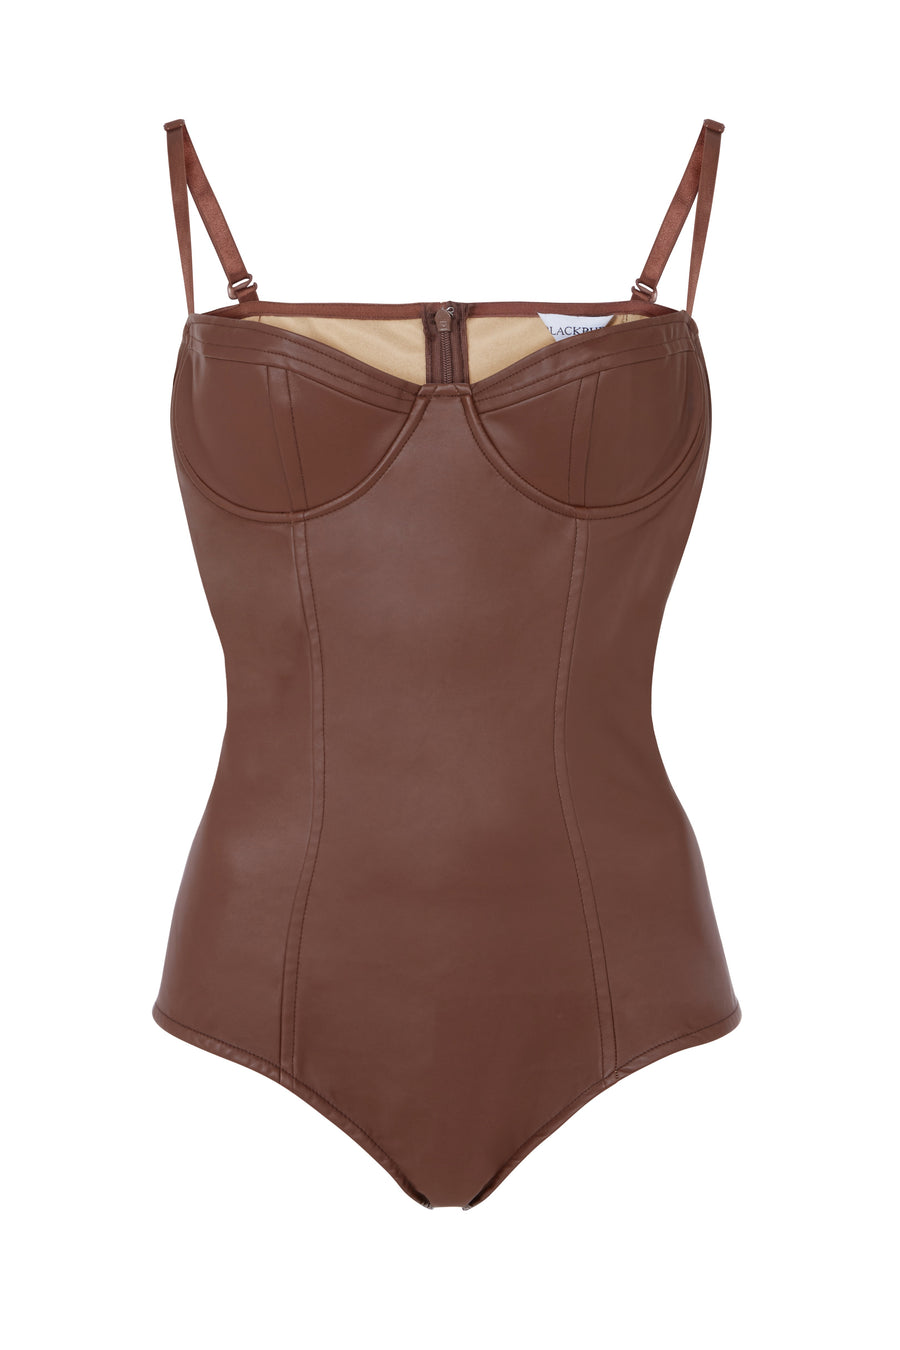 Brown leather Bodysuit (Bianca)